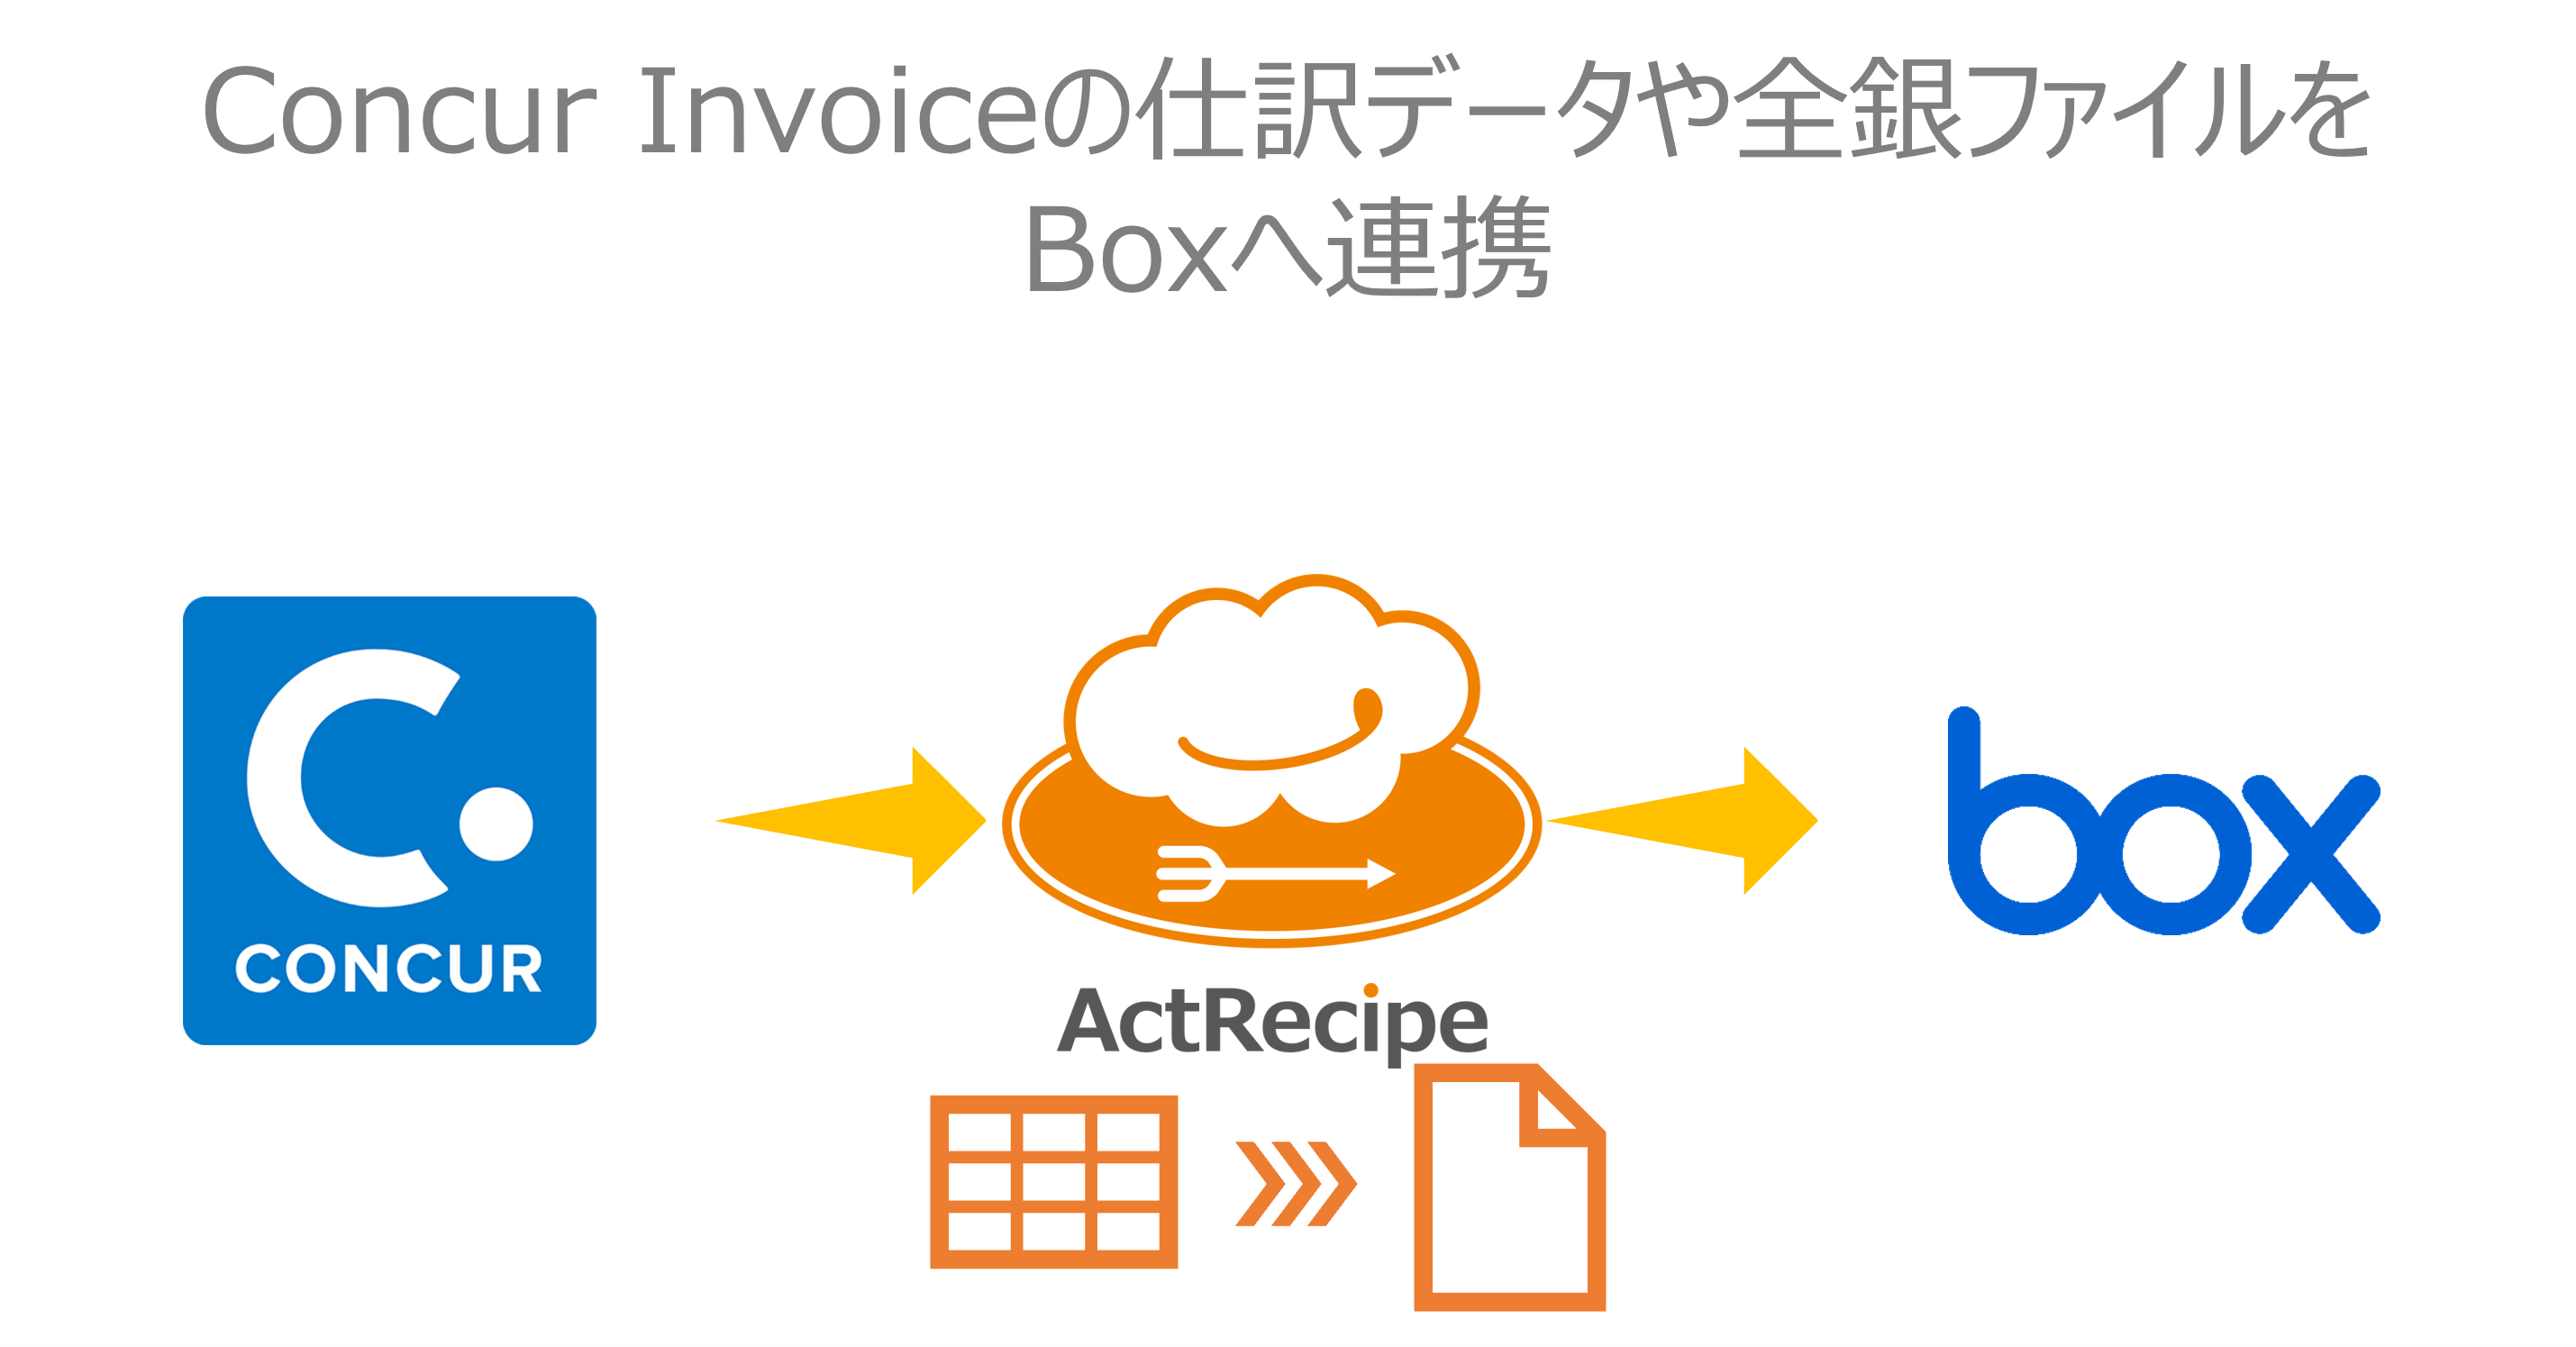 Concur_Invoice______________Box___.png